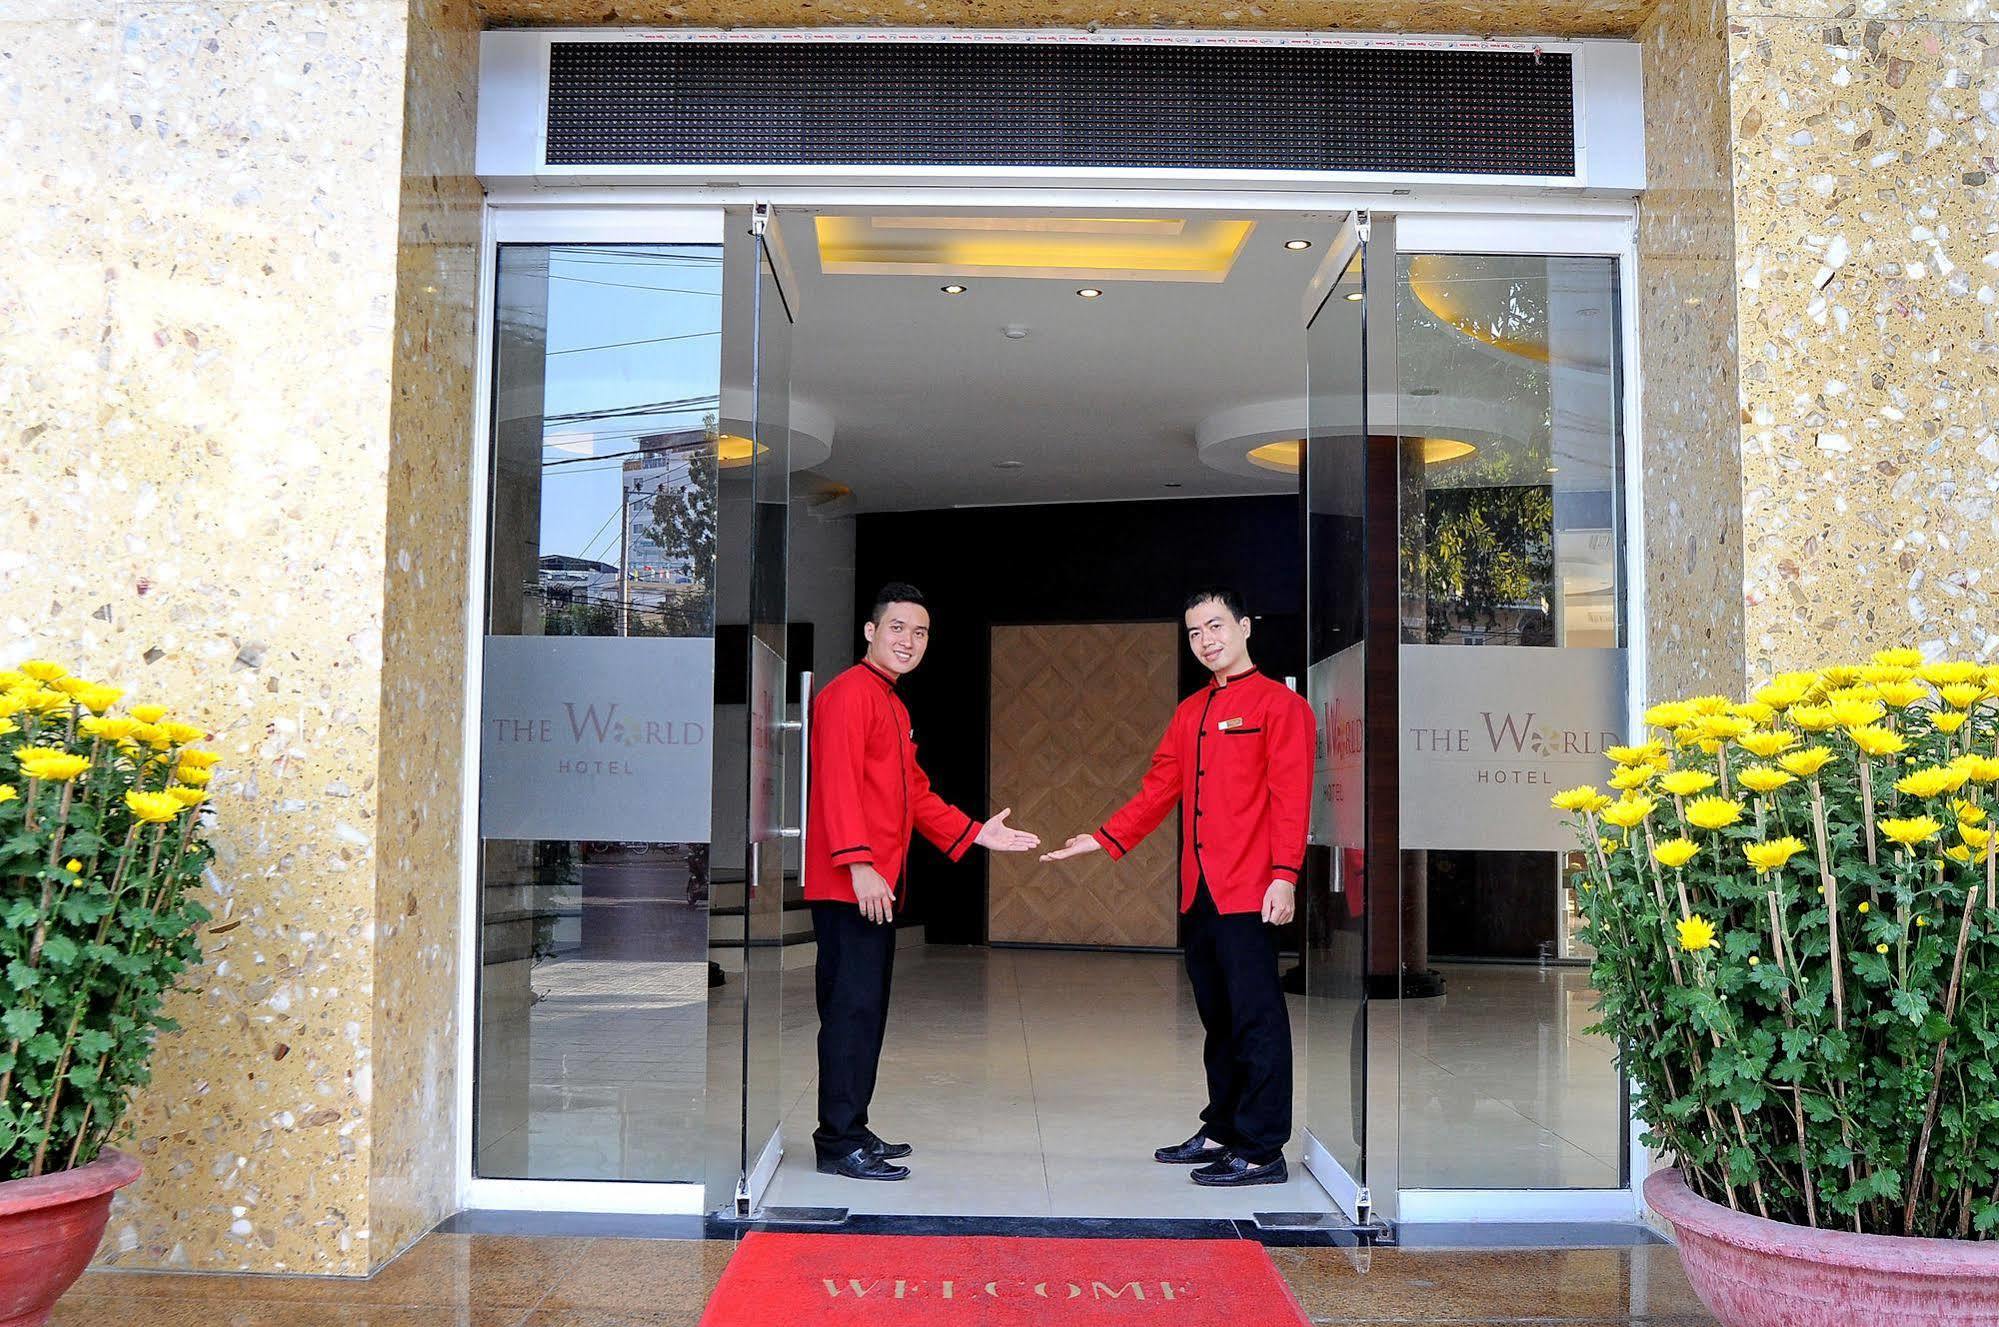 Camellia Nhatrang Hotel Nha Trang Zewnętrze zdjęcie